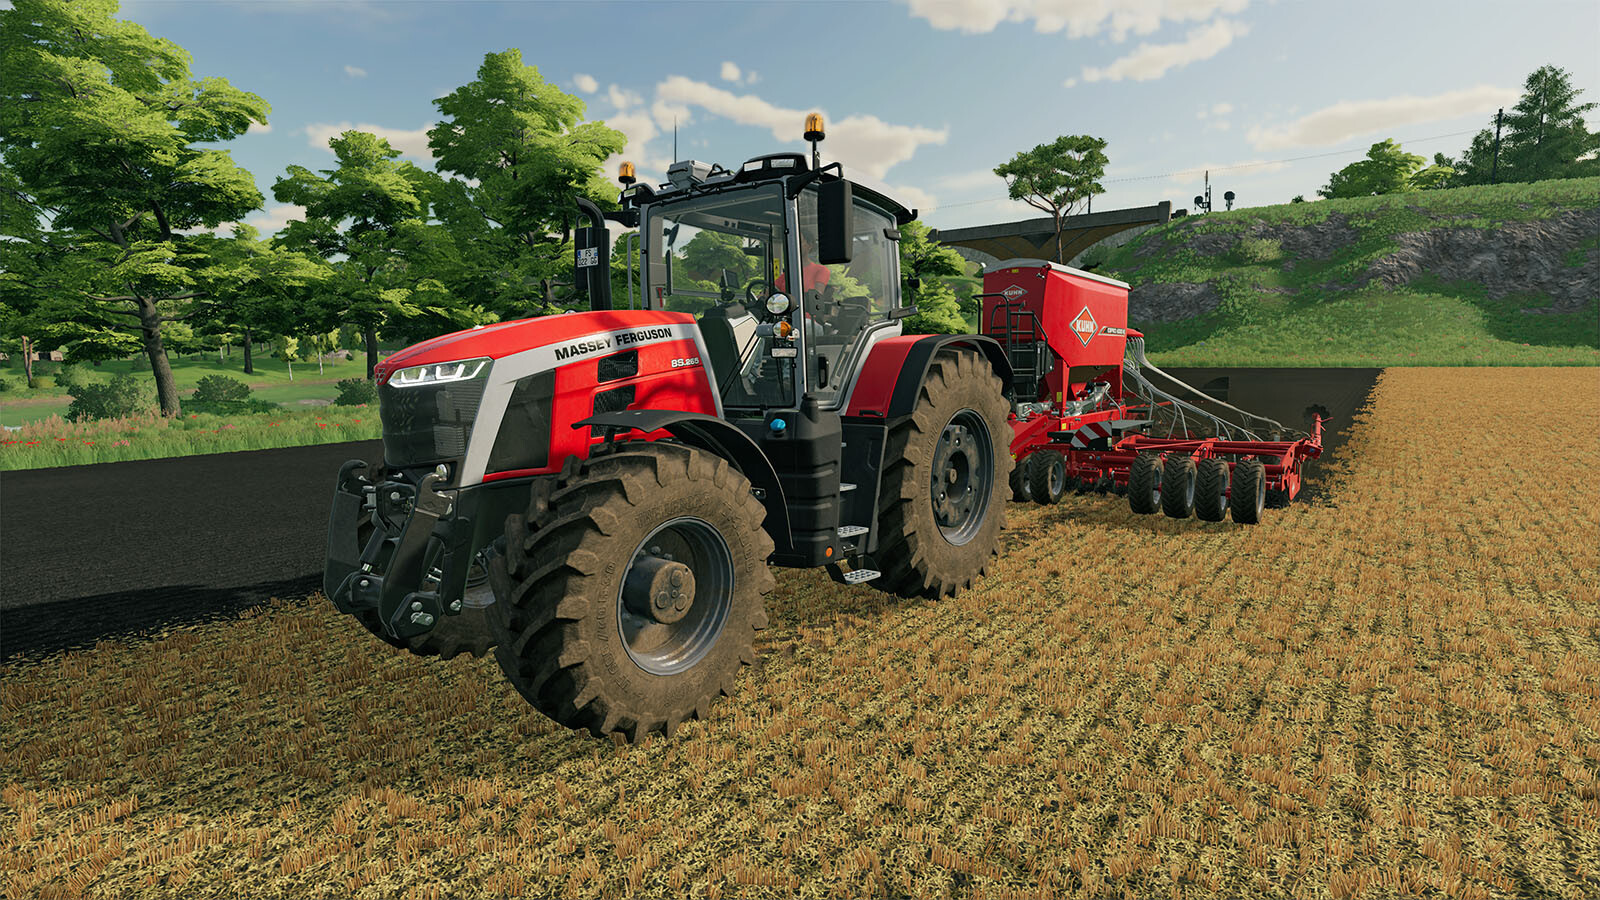 Landwirtschafts-Simulator 22  Platinum Edition - [PlayStation 4